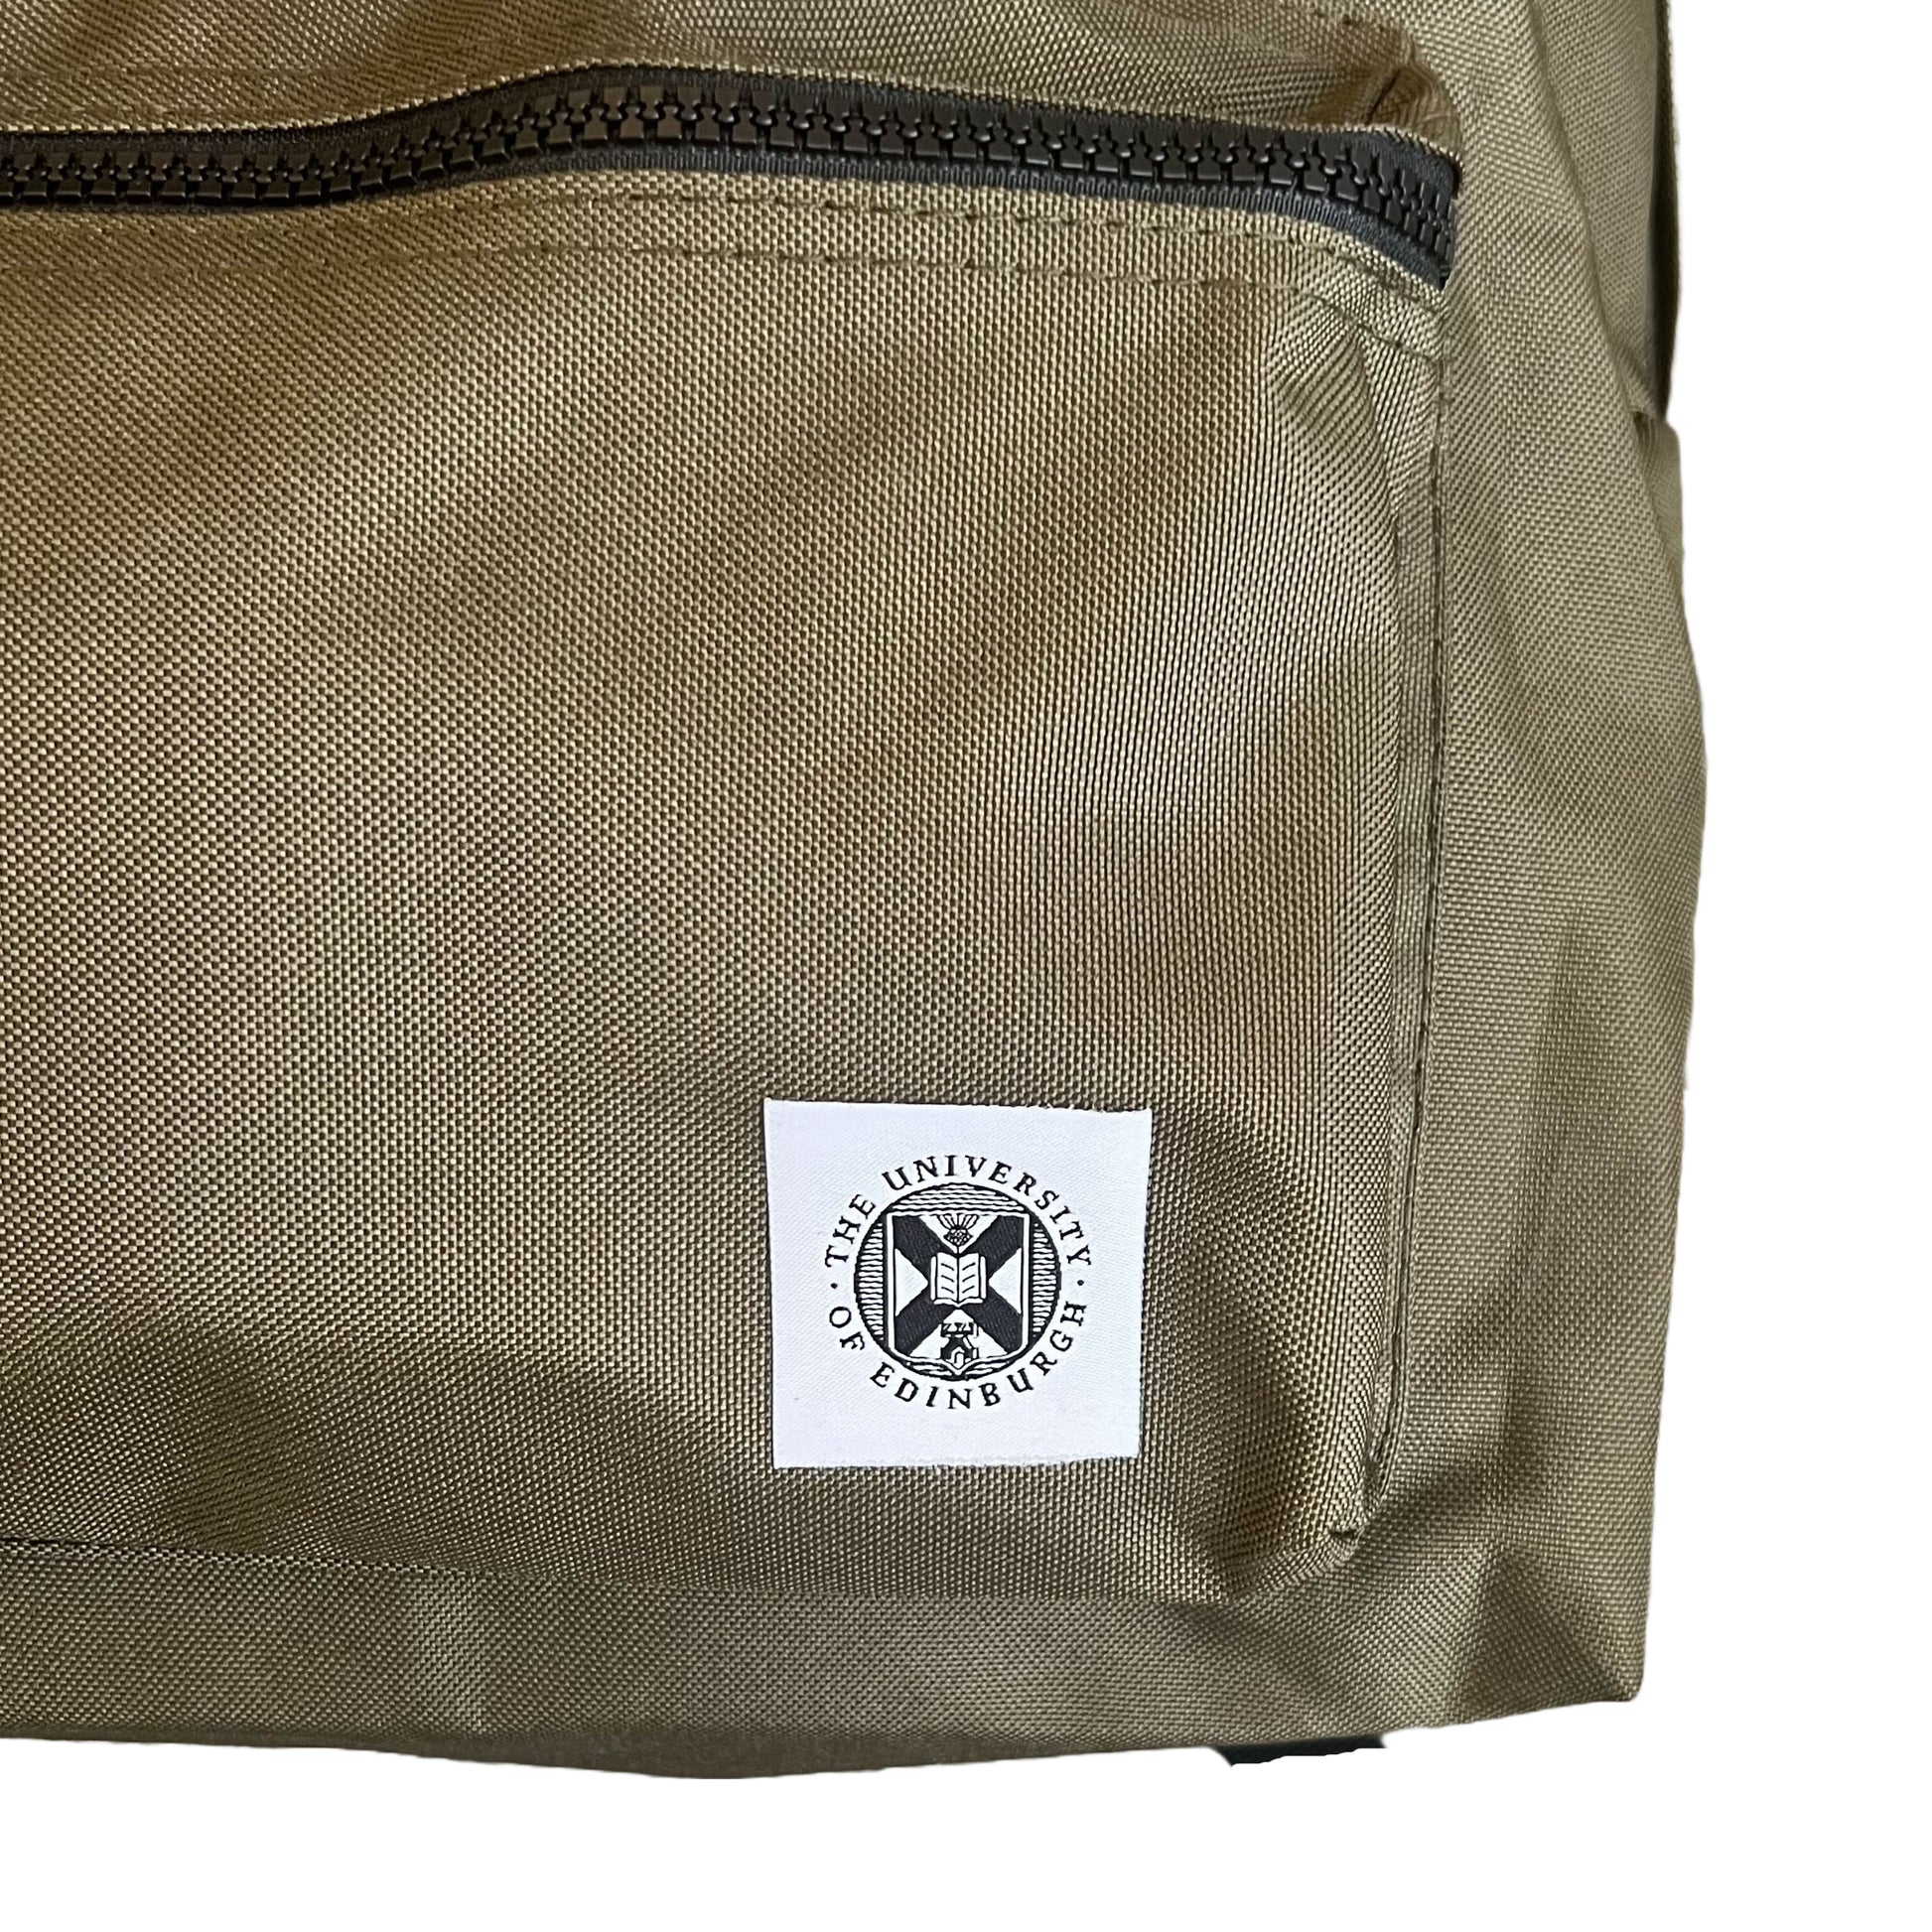 Close up of the University of Edinburgh's crest stitched onto a khaki backpack.